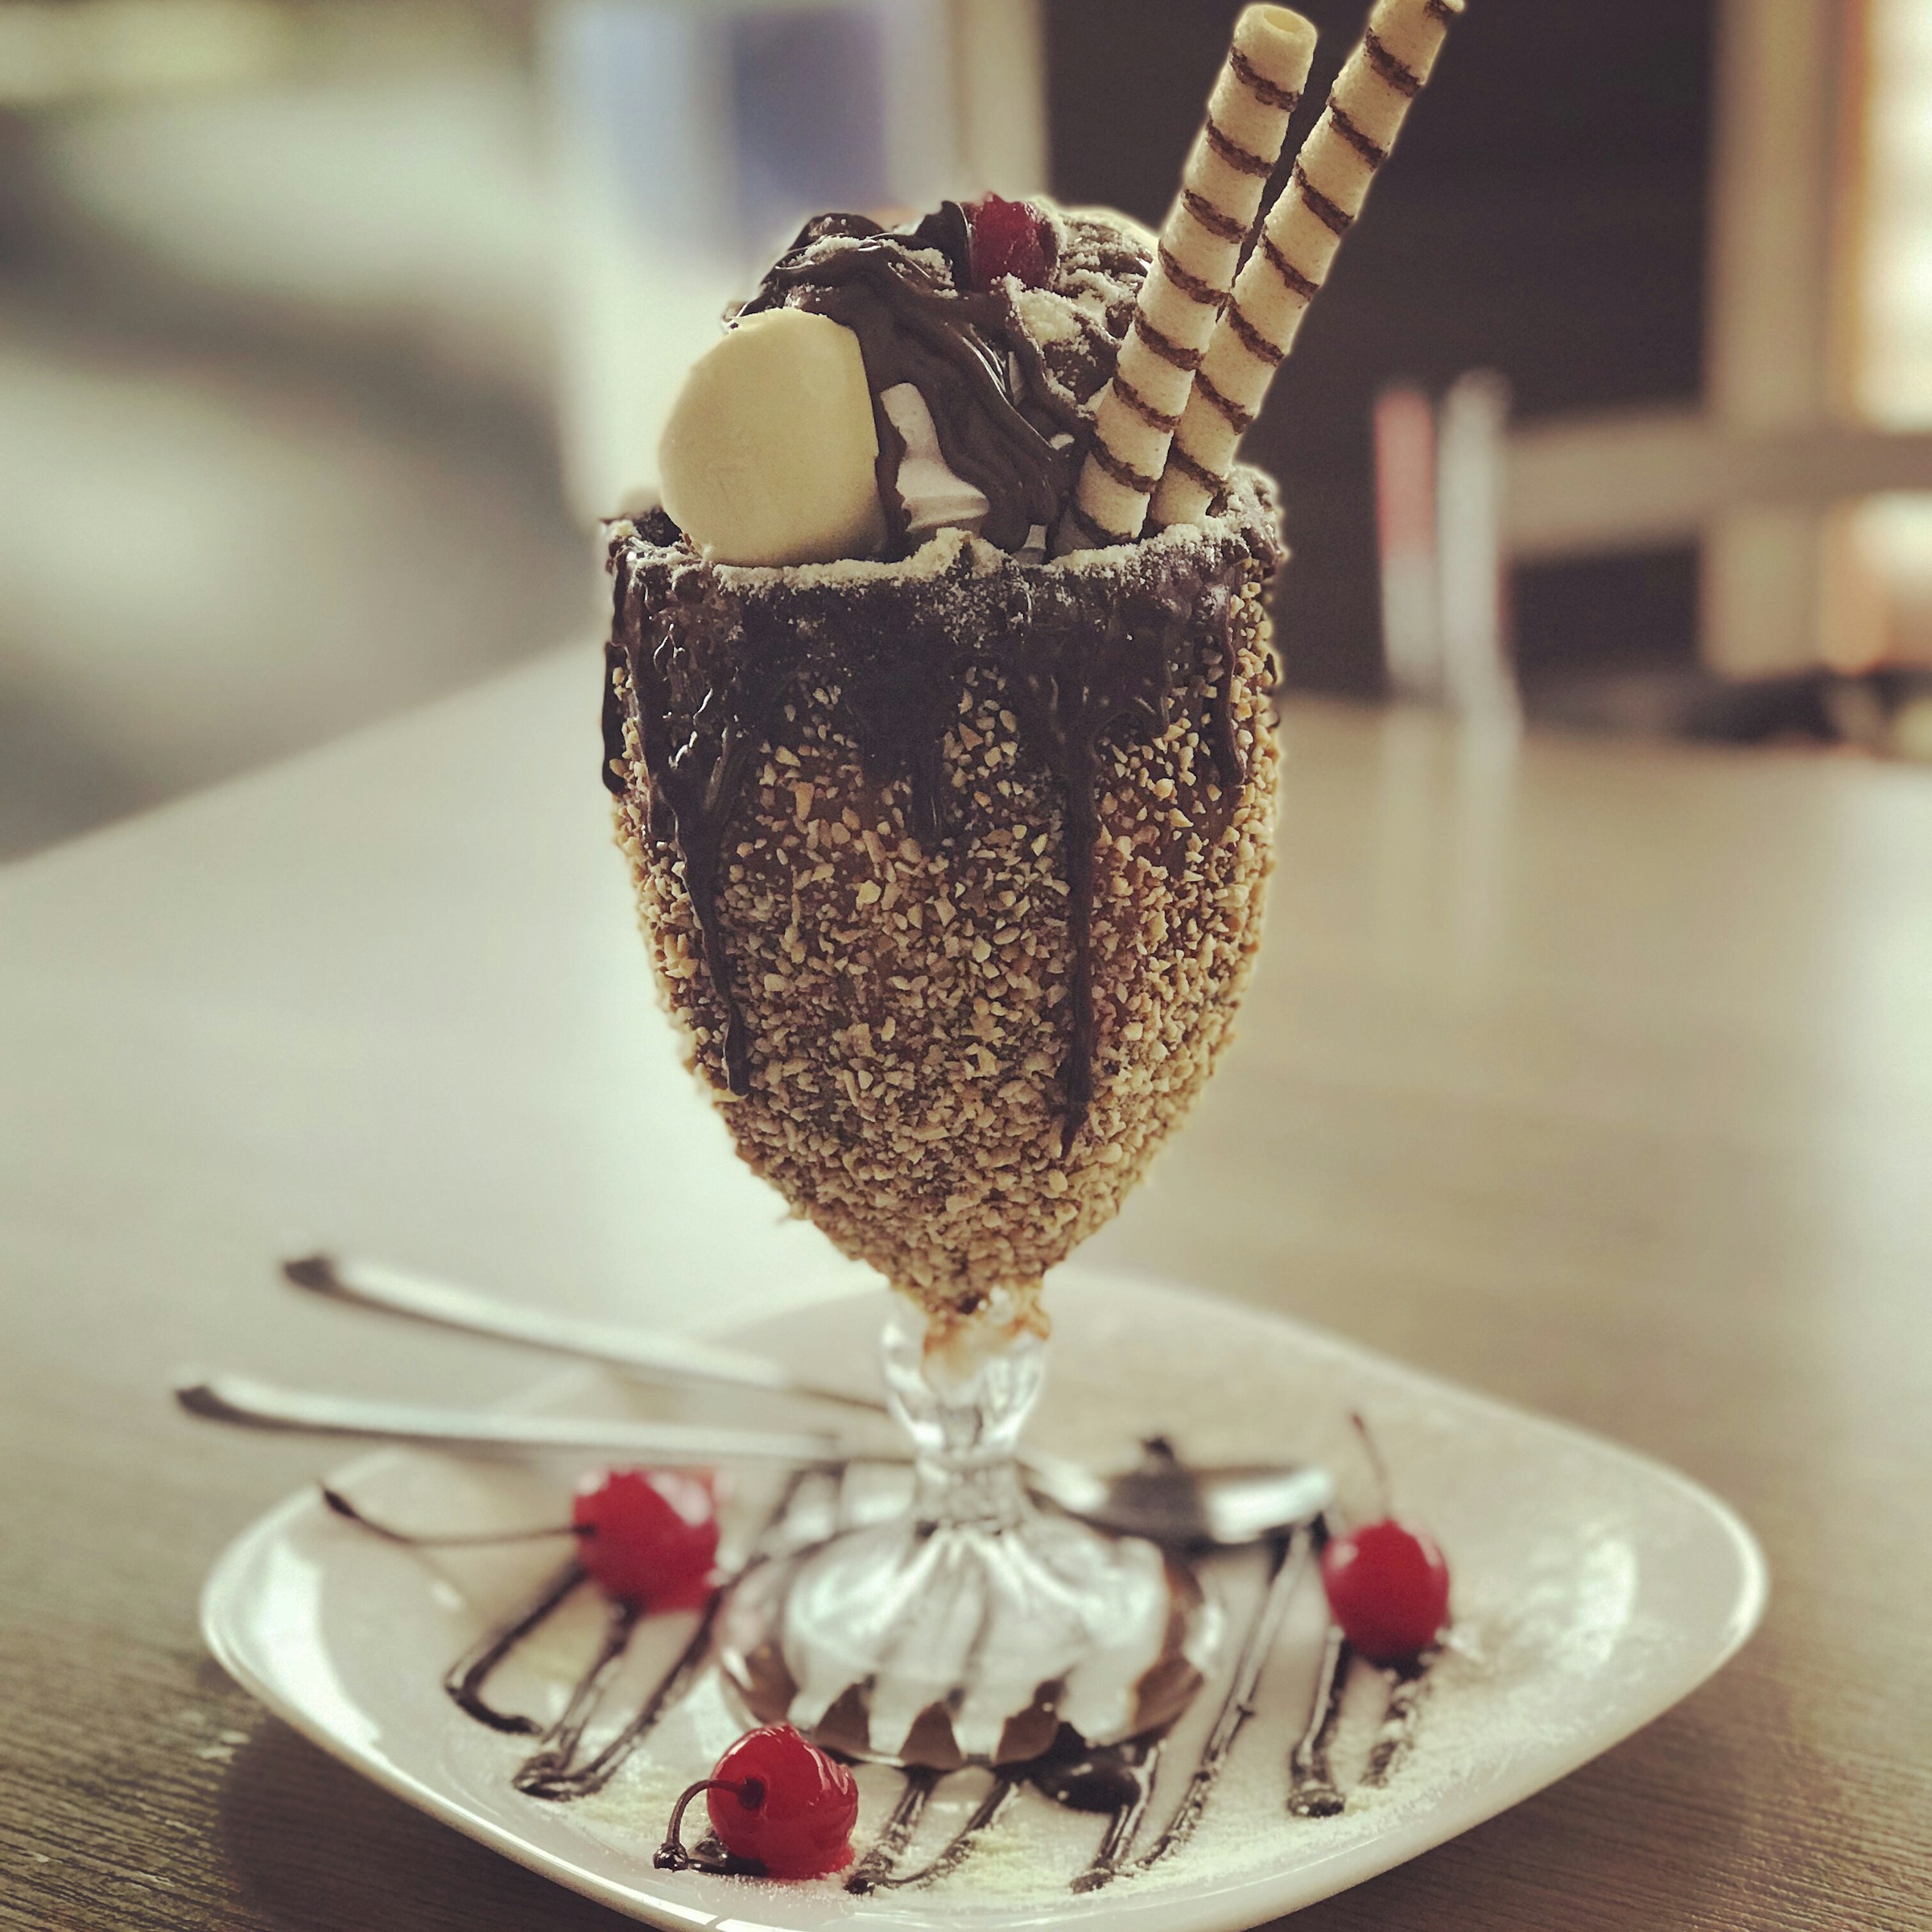 An ice cream sundae | Source: Unsplash